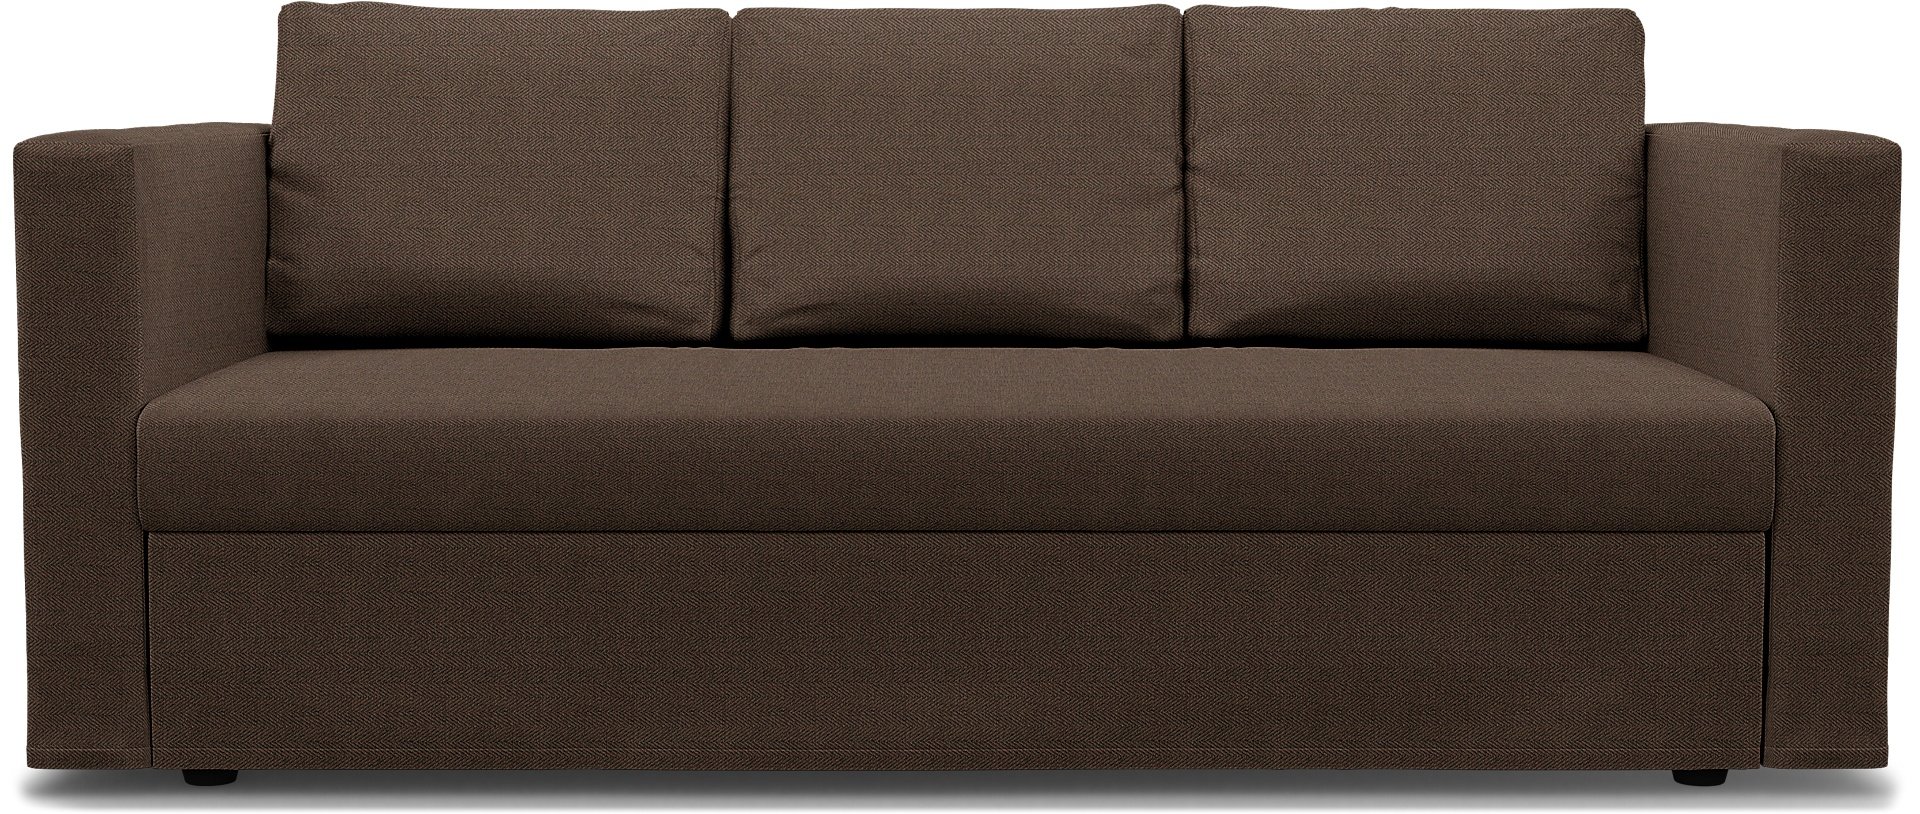 IKEA - Friheten 3 Seater Sofa Bed Cover, Chocolate, Boucle & Texture - Bemz